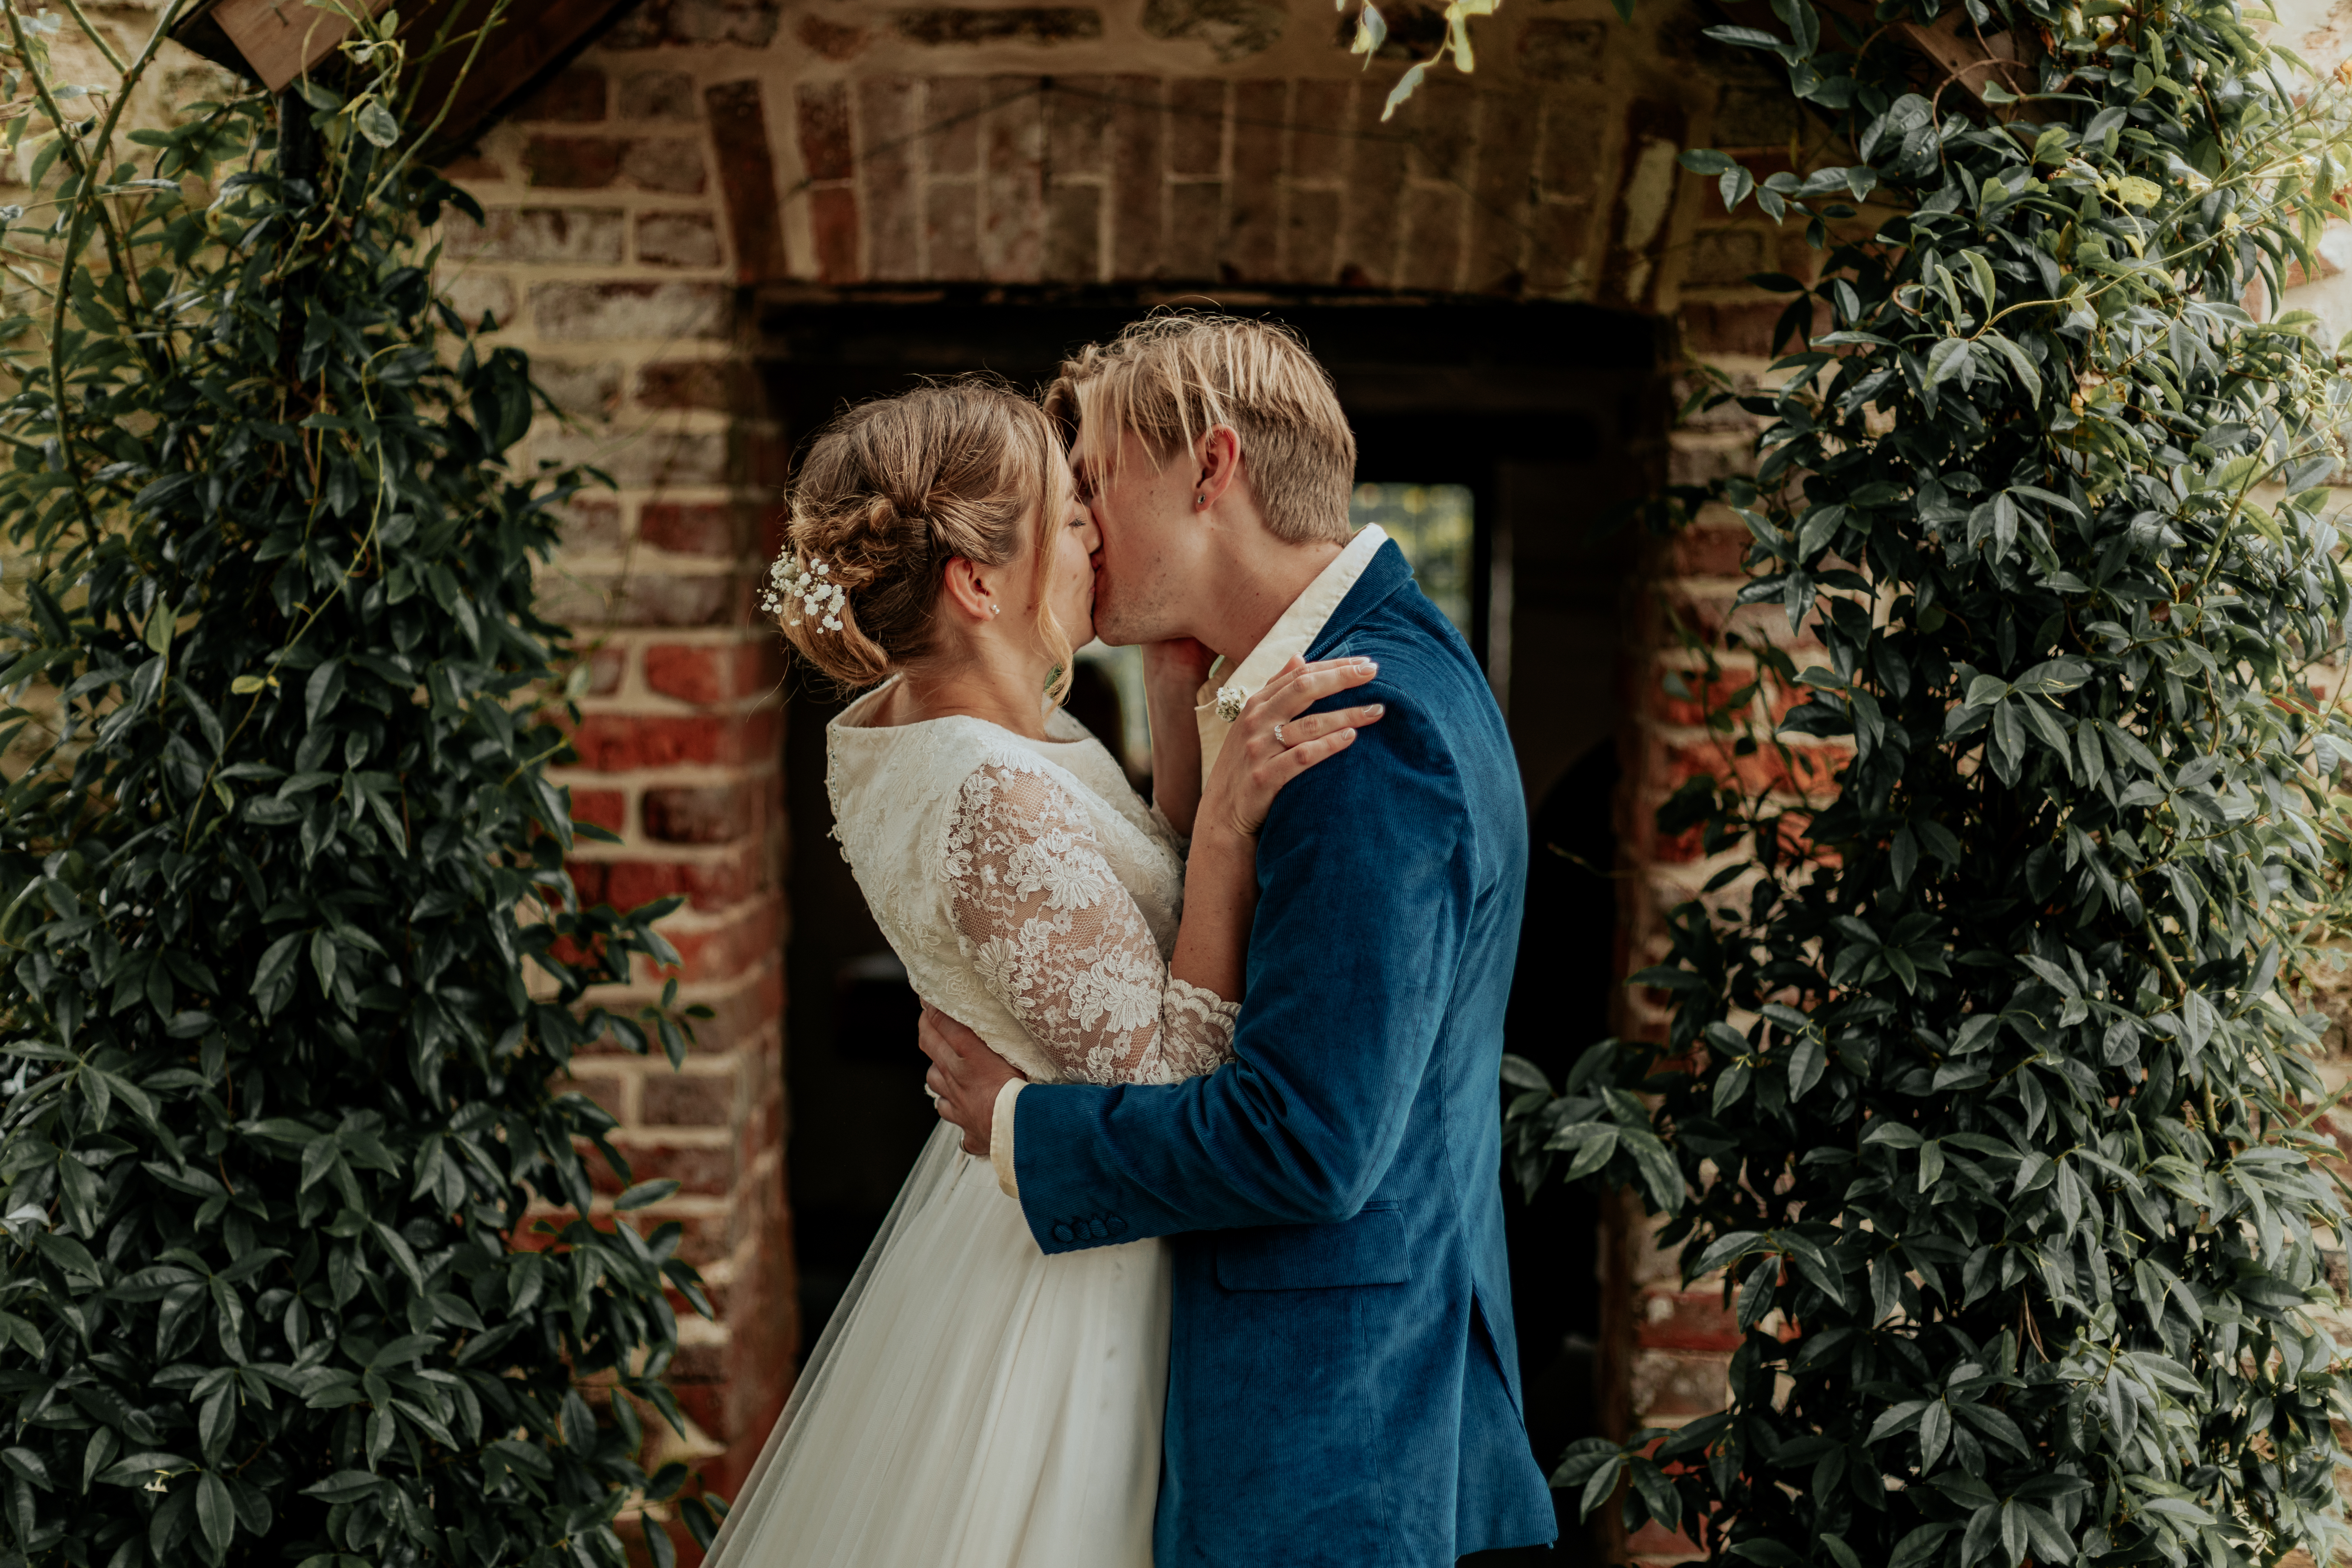 Sarah & Cameron kiss during their wedding ceremony